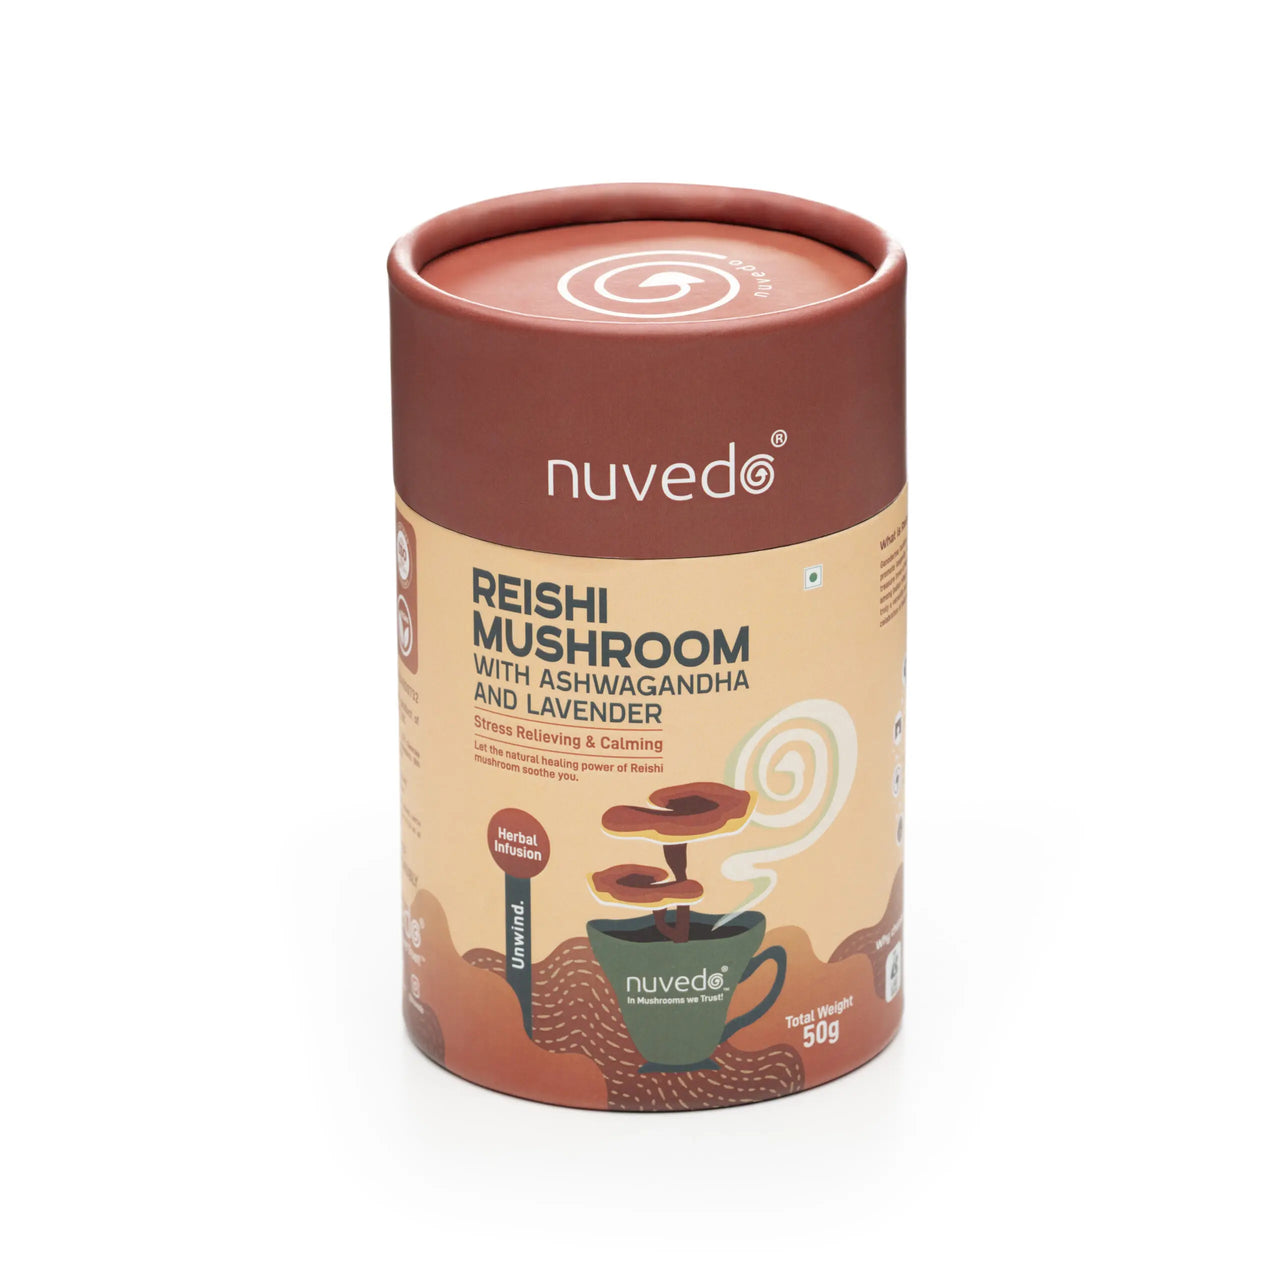 Nuvedo - Reishi Mushroom Dual Extract with Ashwagandha and Lavender